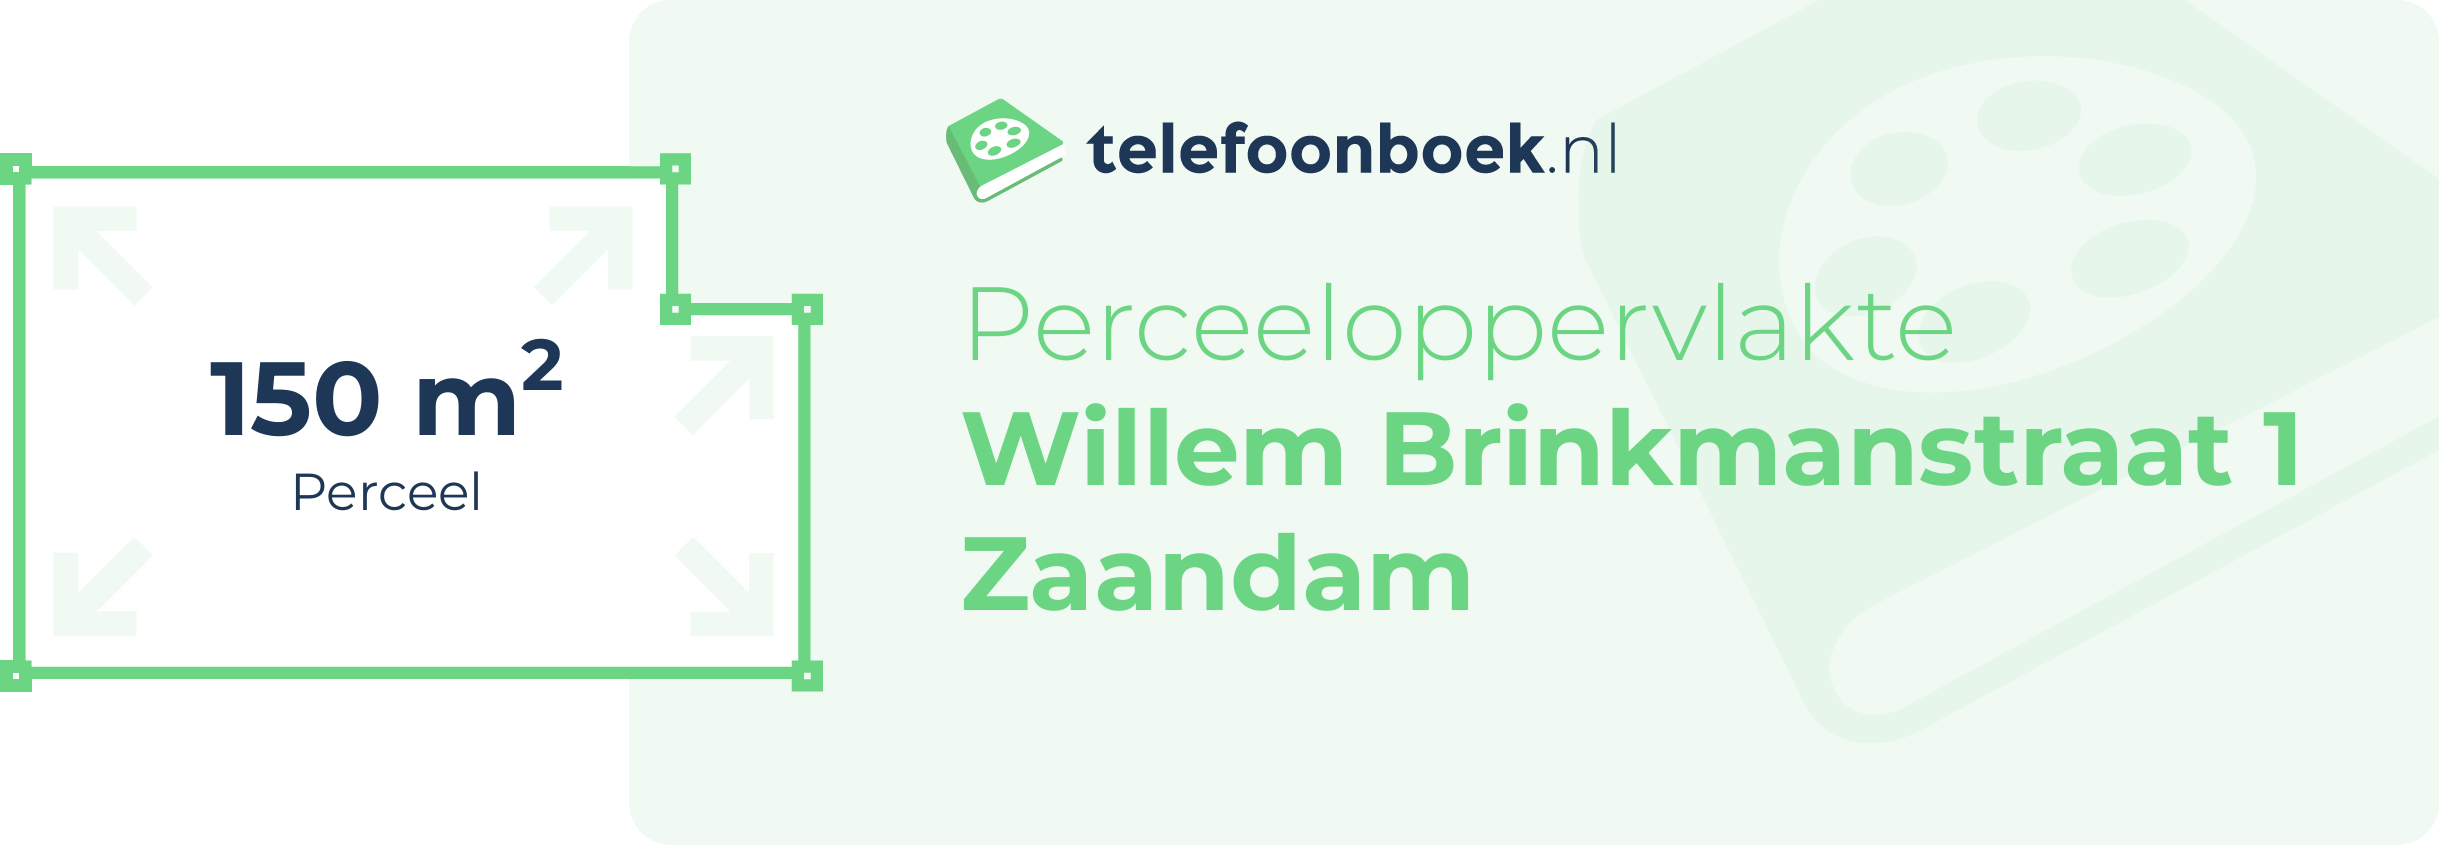 Perceeloppervlakte Willem Brinkmanstraat 1 Zaandam